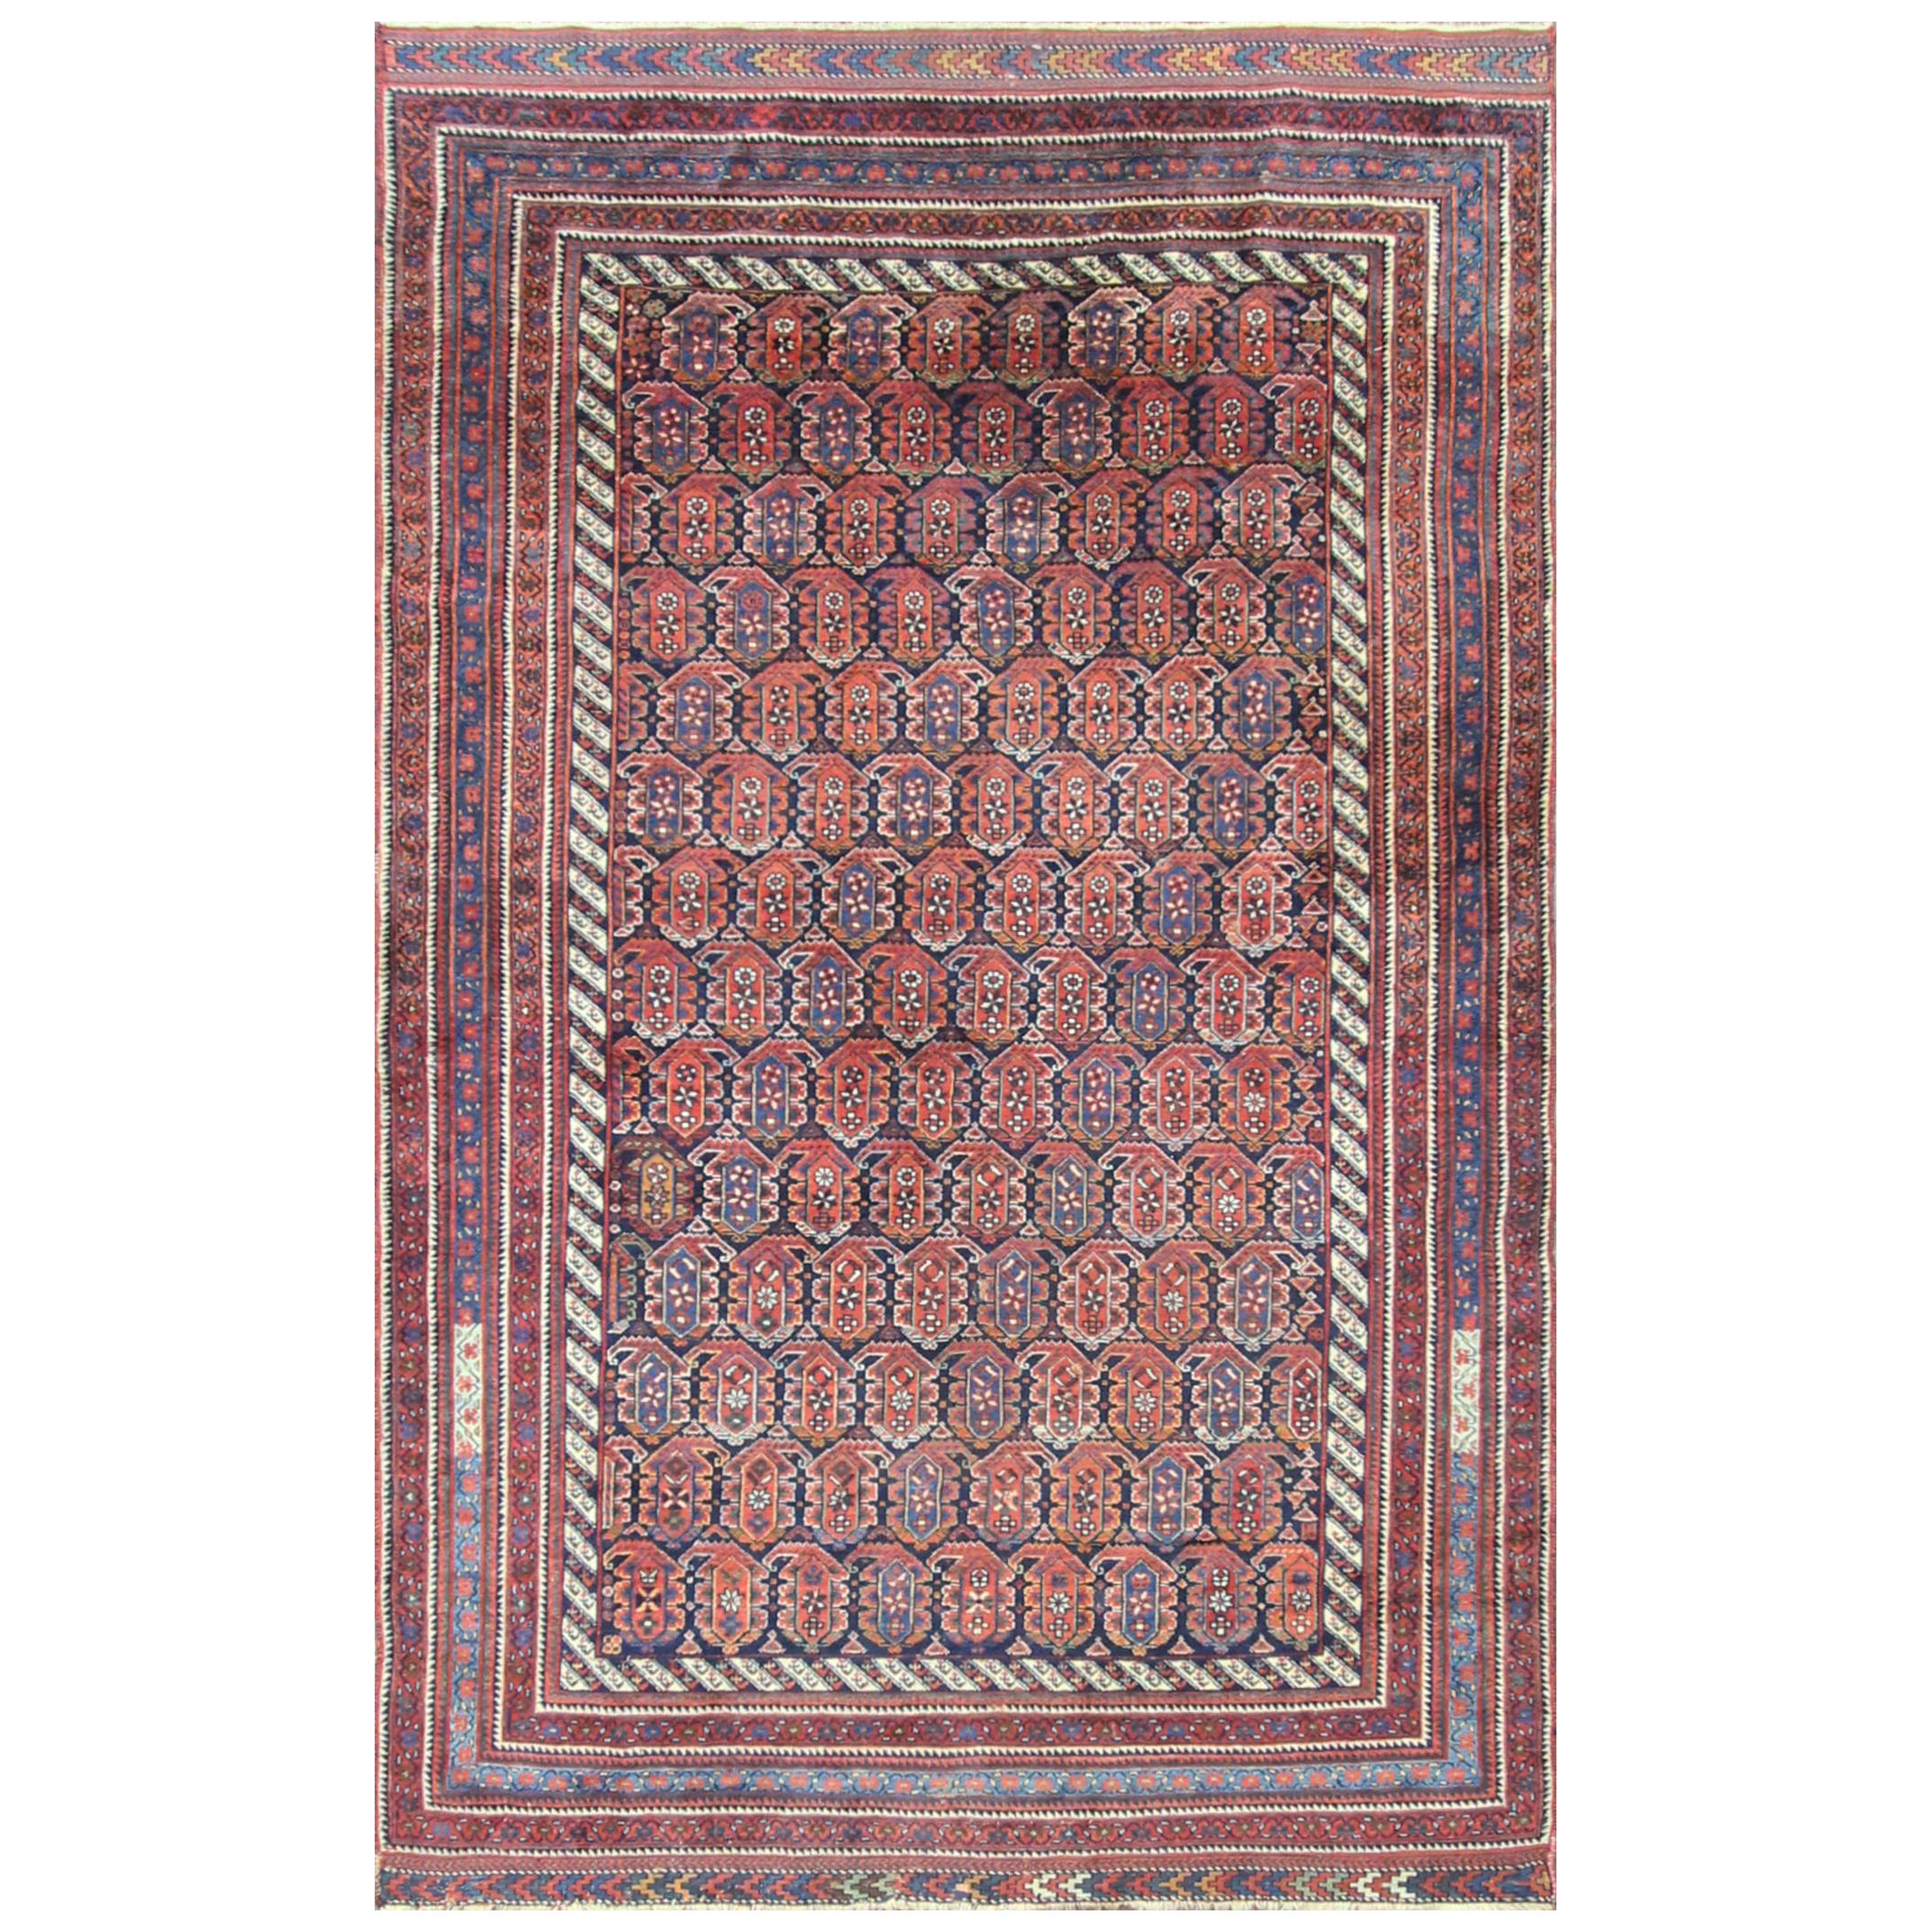 Antique Persian Afshar Carpet, Magnificent, Tribal, 5'8" x 9'5"